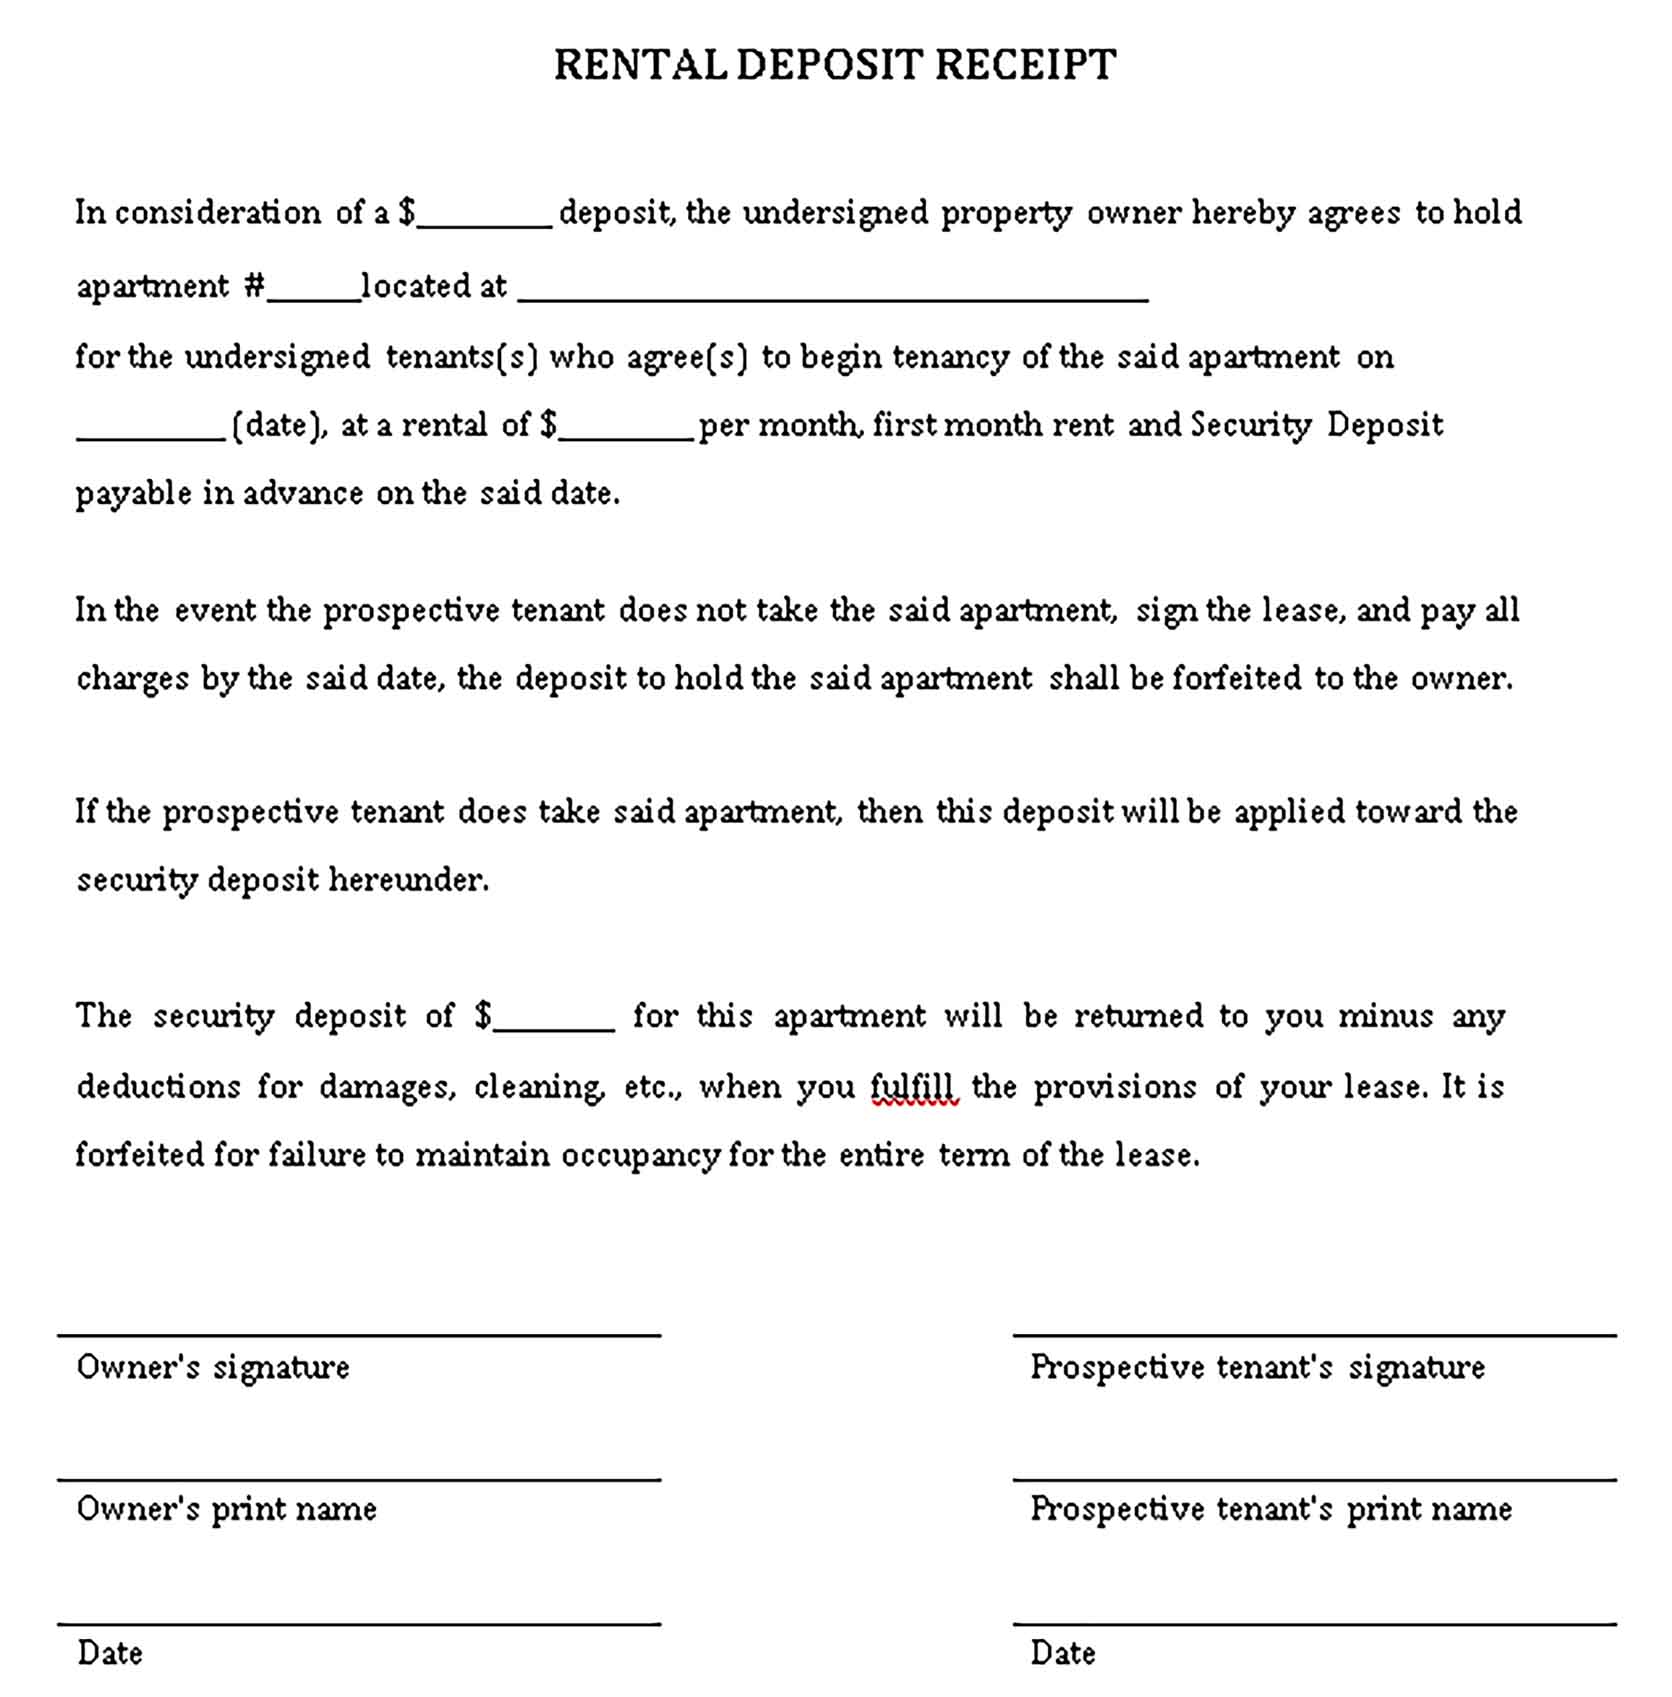 Sample Rental Deposit Receipt 2 Templates